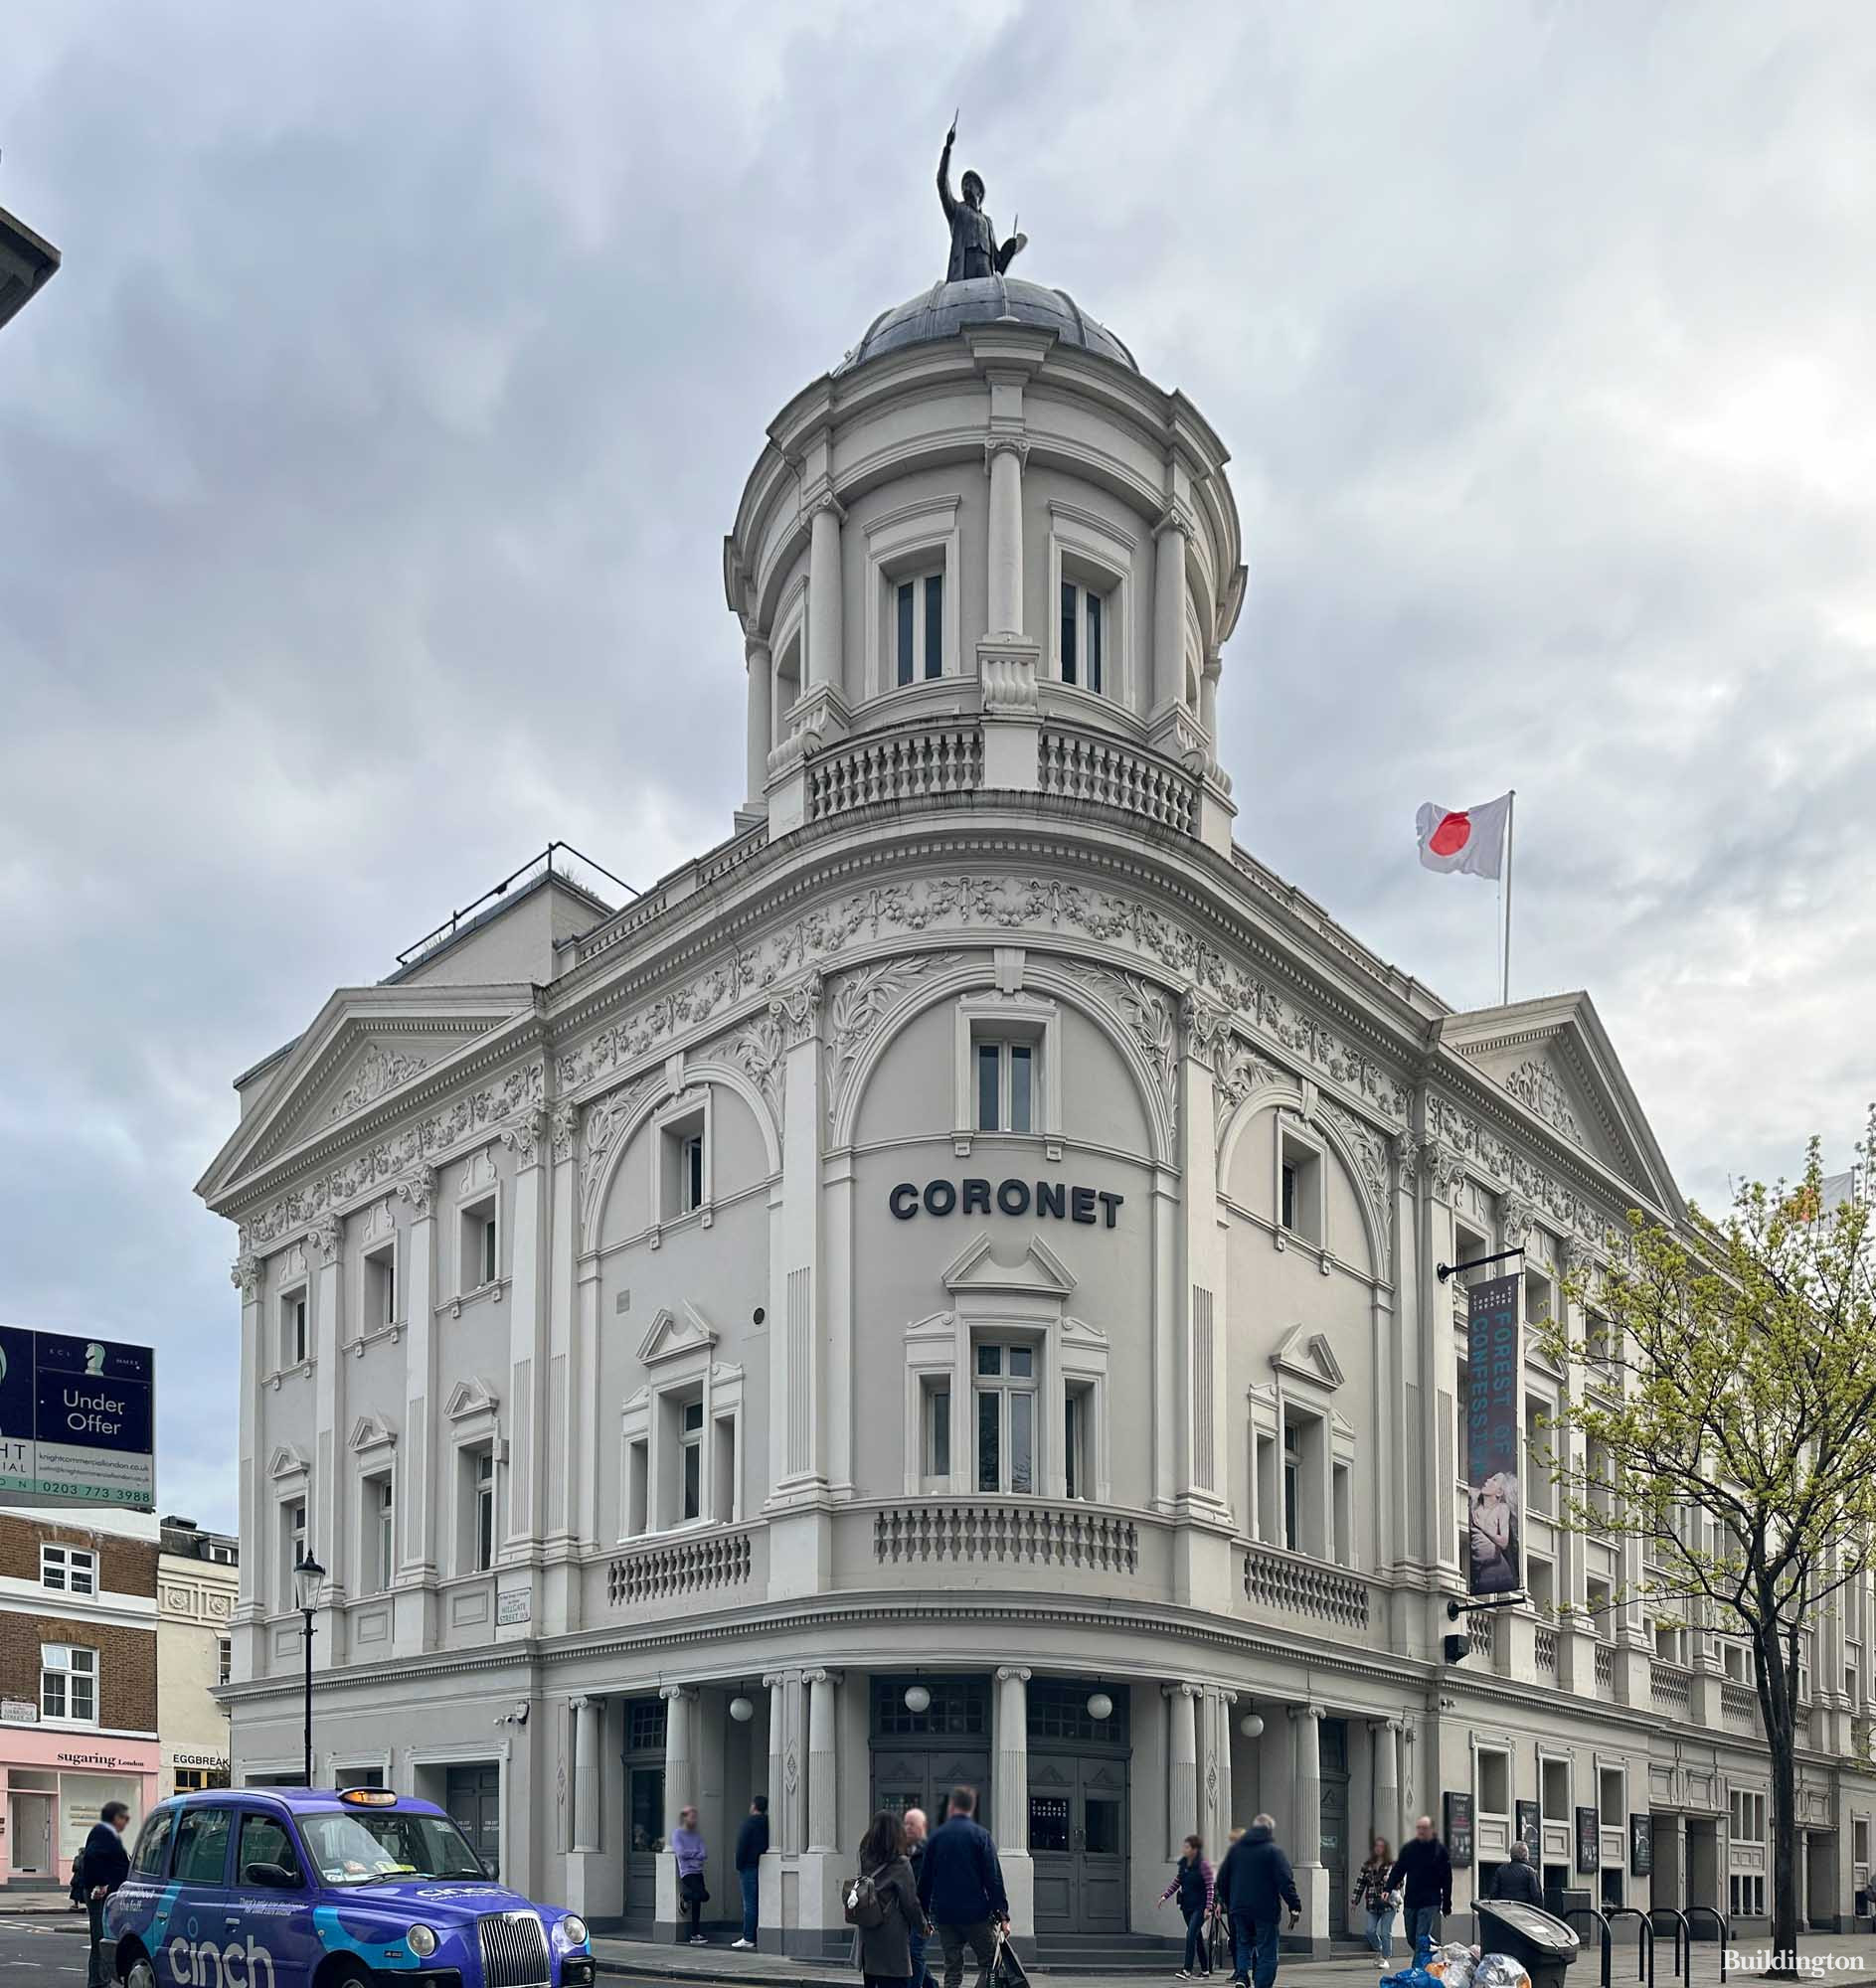 Coronet Cinema - The Coronet Theatre building in Notting Hill Gate, London W11.